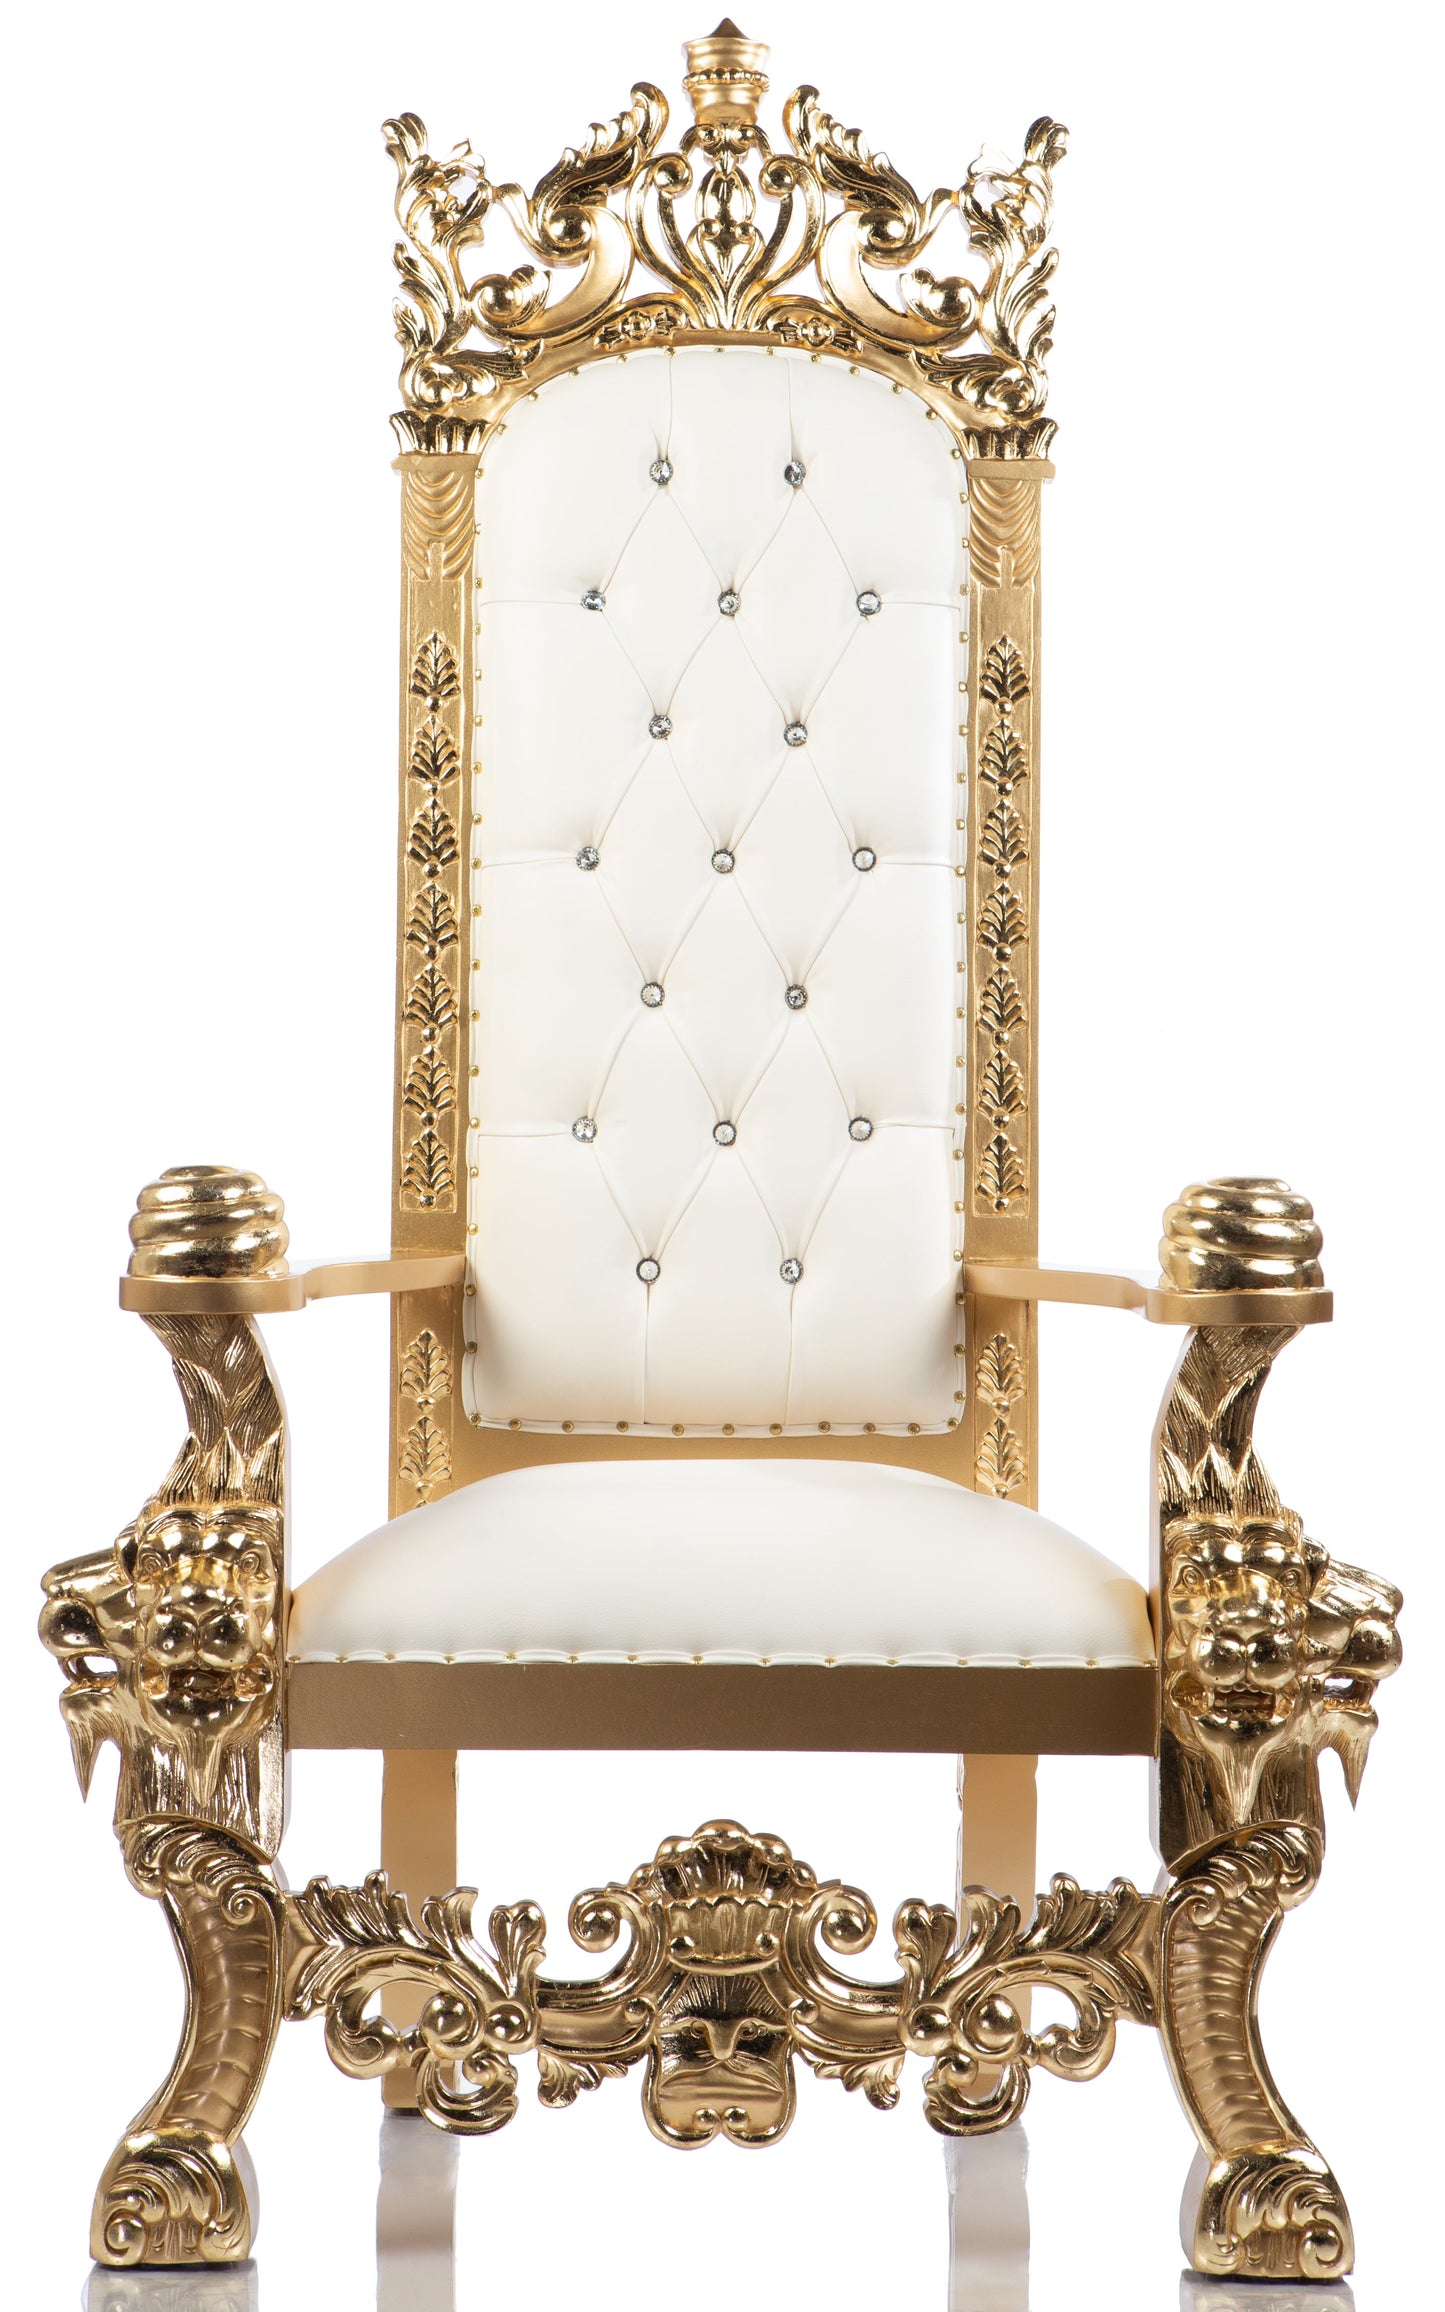 King Marina Throne